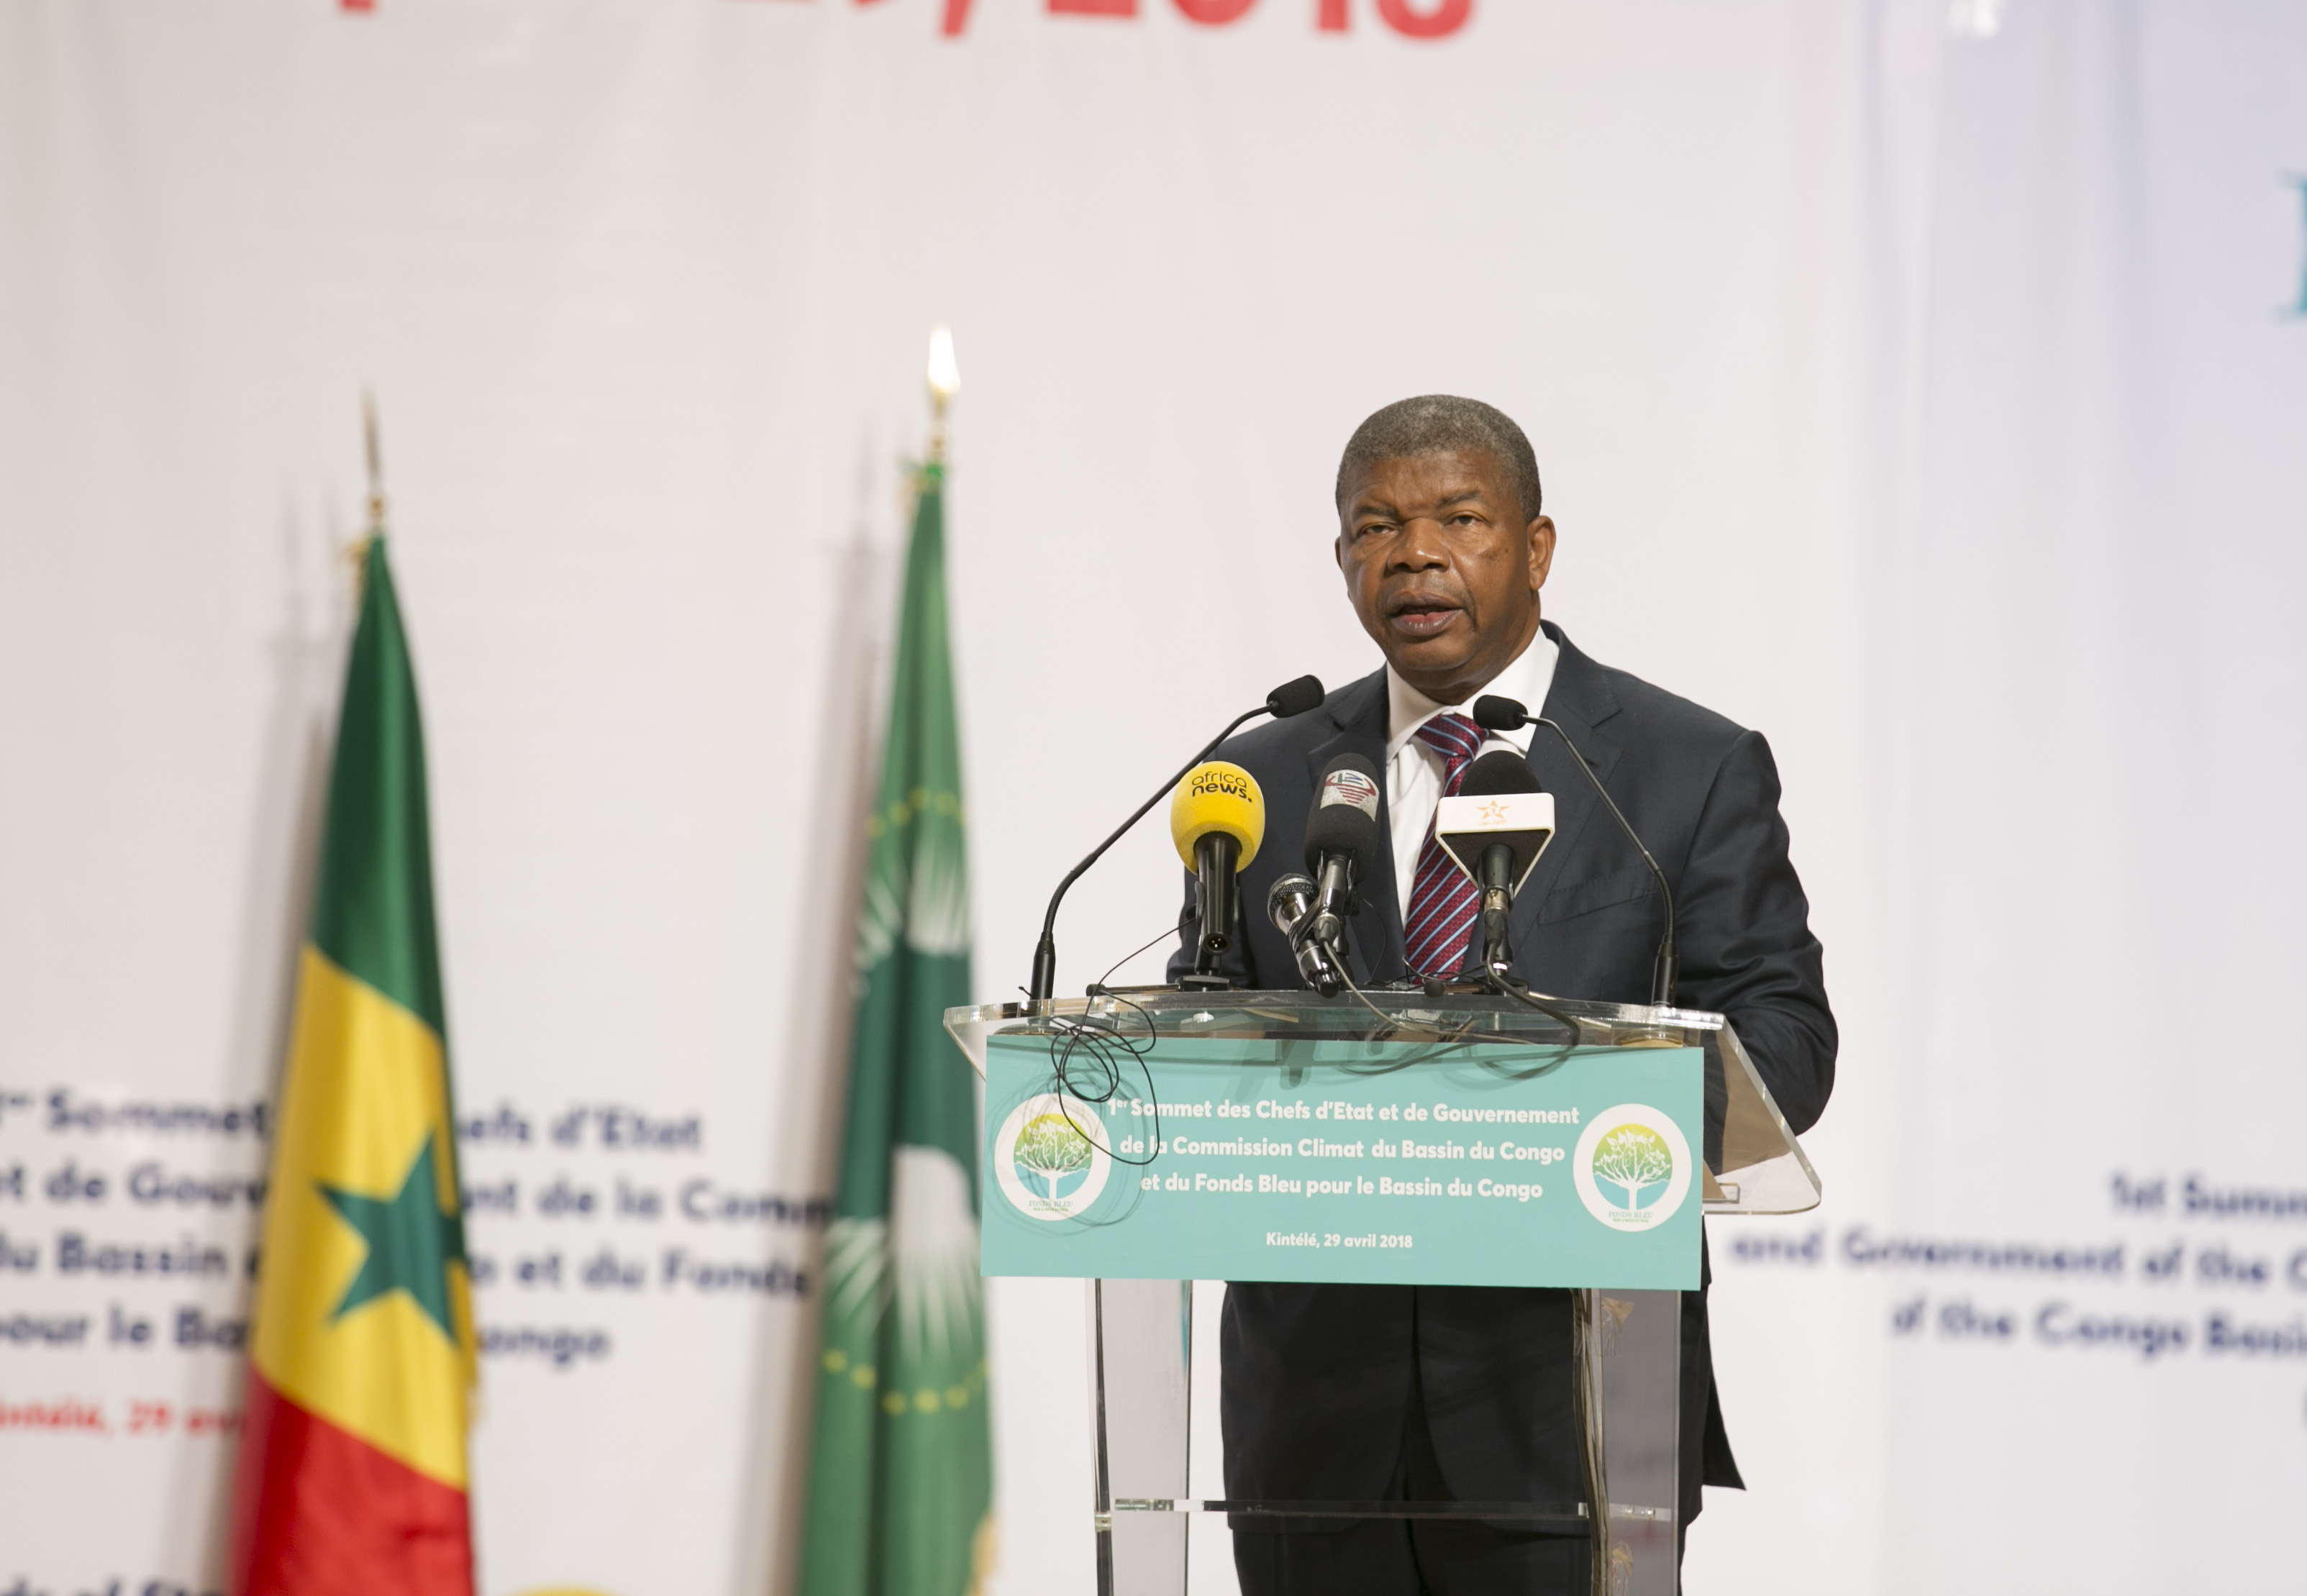  President João Lourenço of Angola (photo credit: Paul Kagame/flickr)